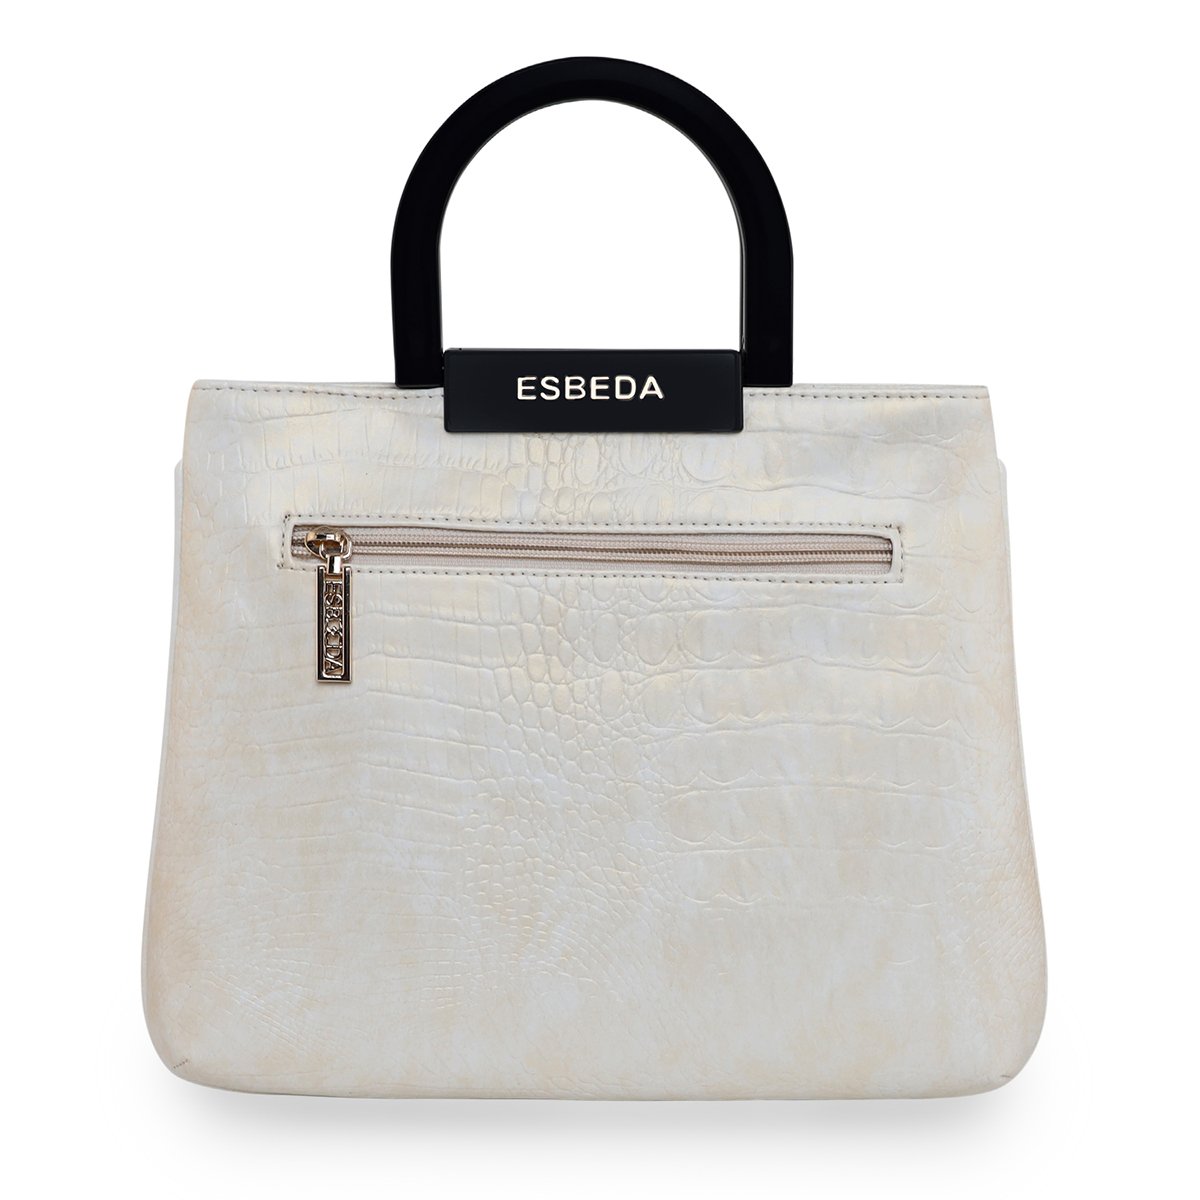 Esbeda Sling Bag | Sling bag, Bags, Sling